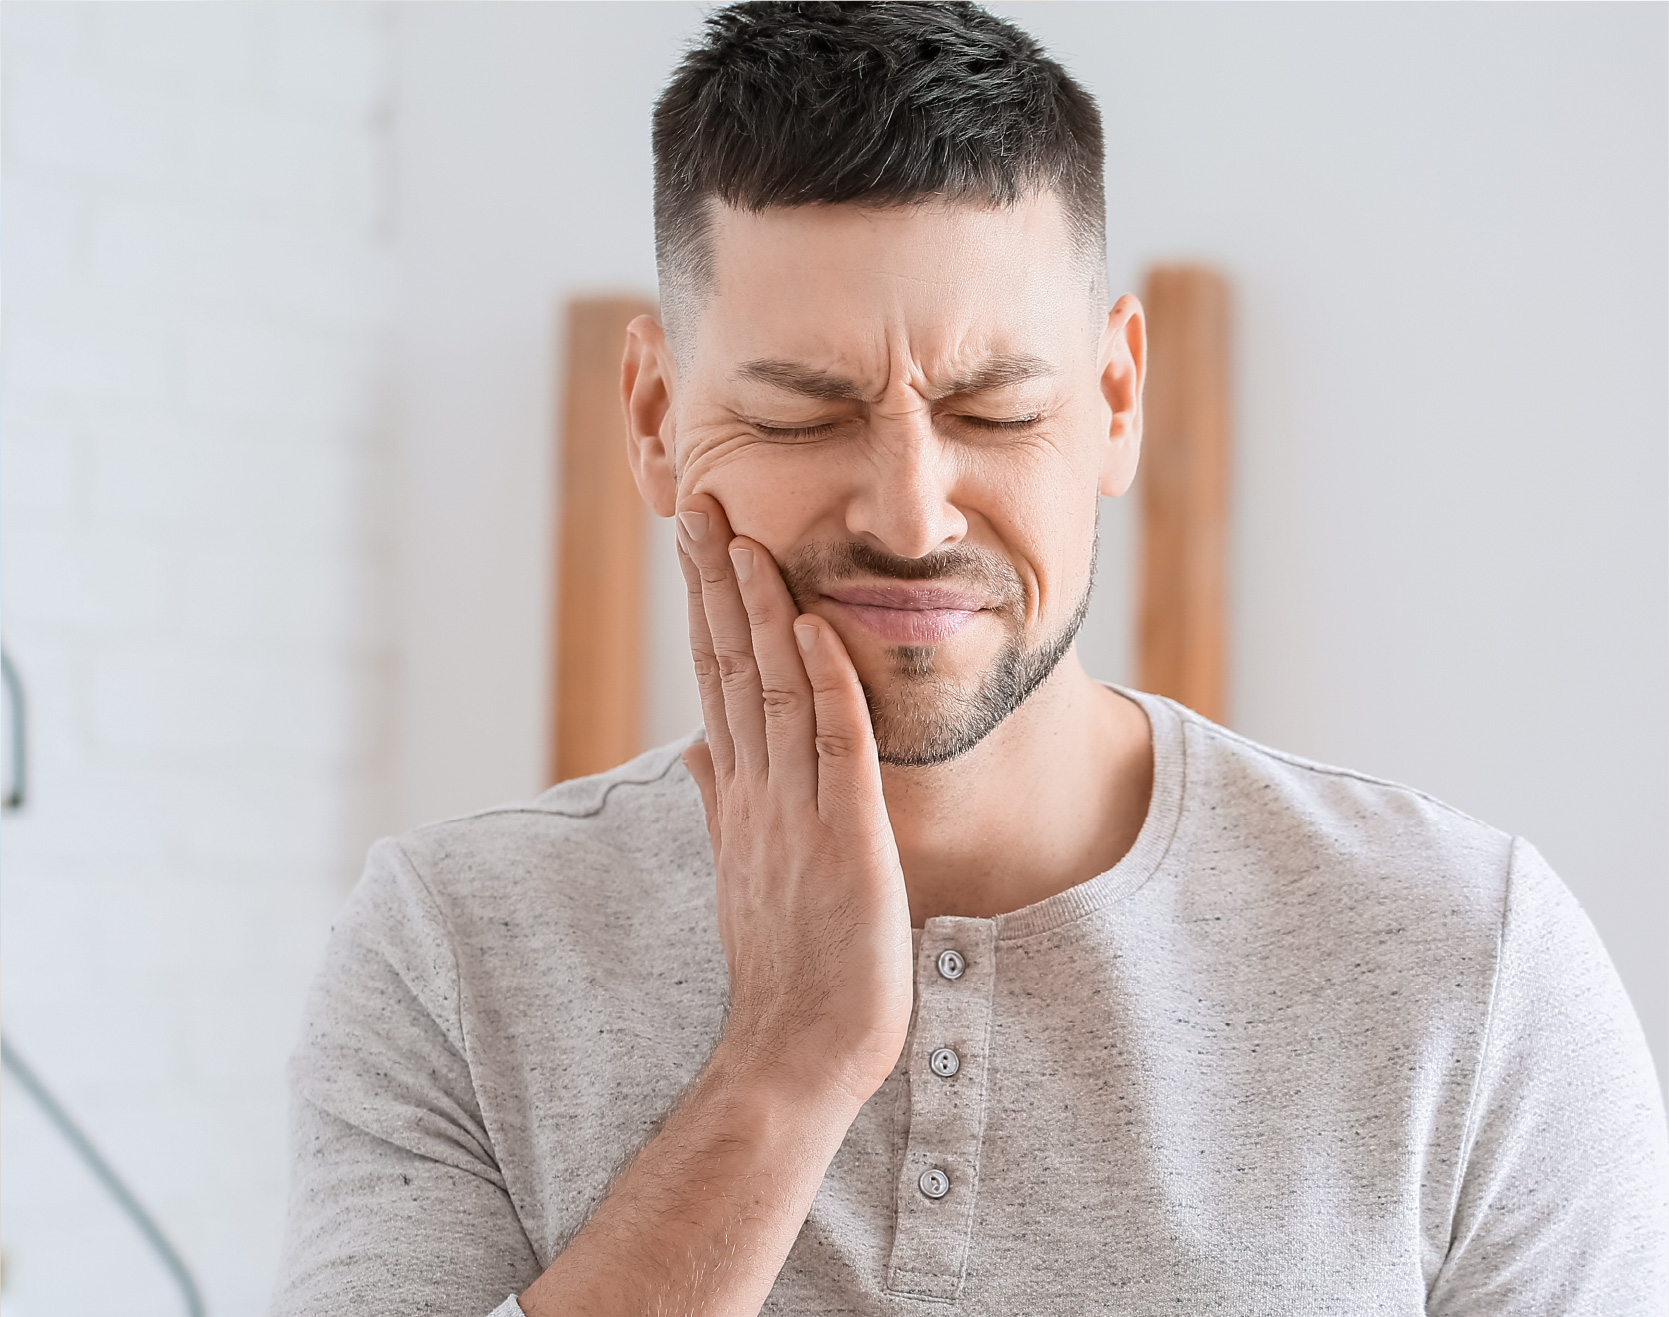 Man experiencing dental pain